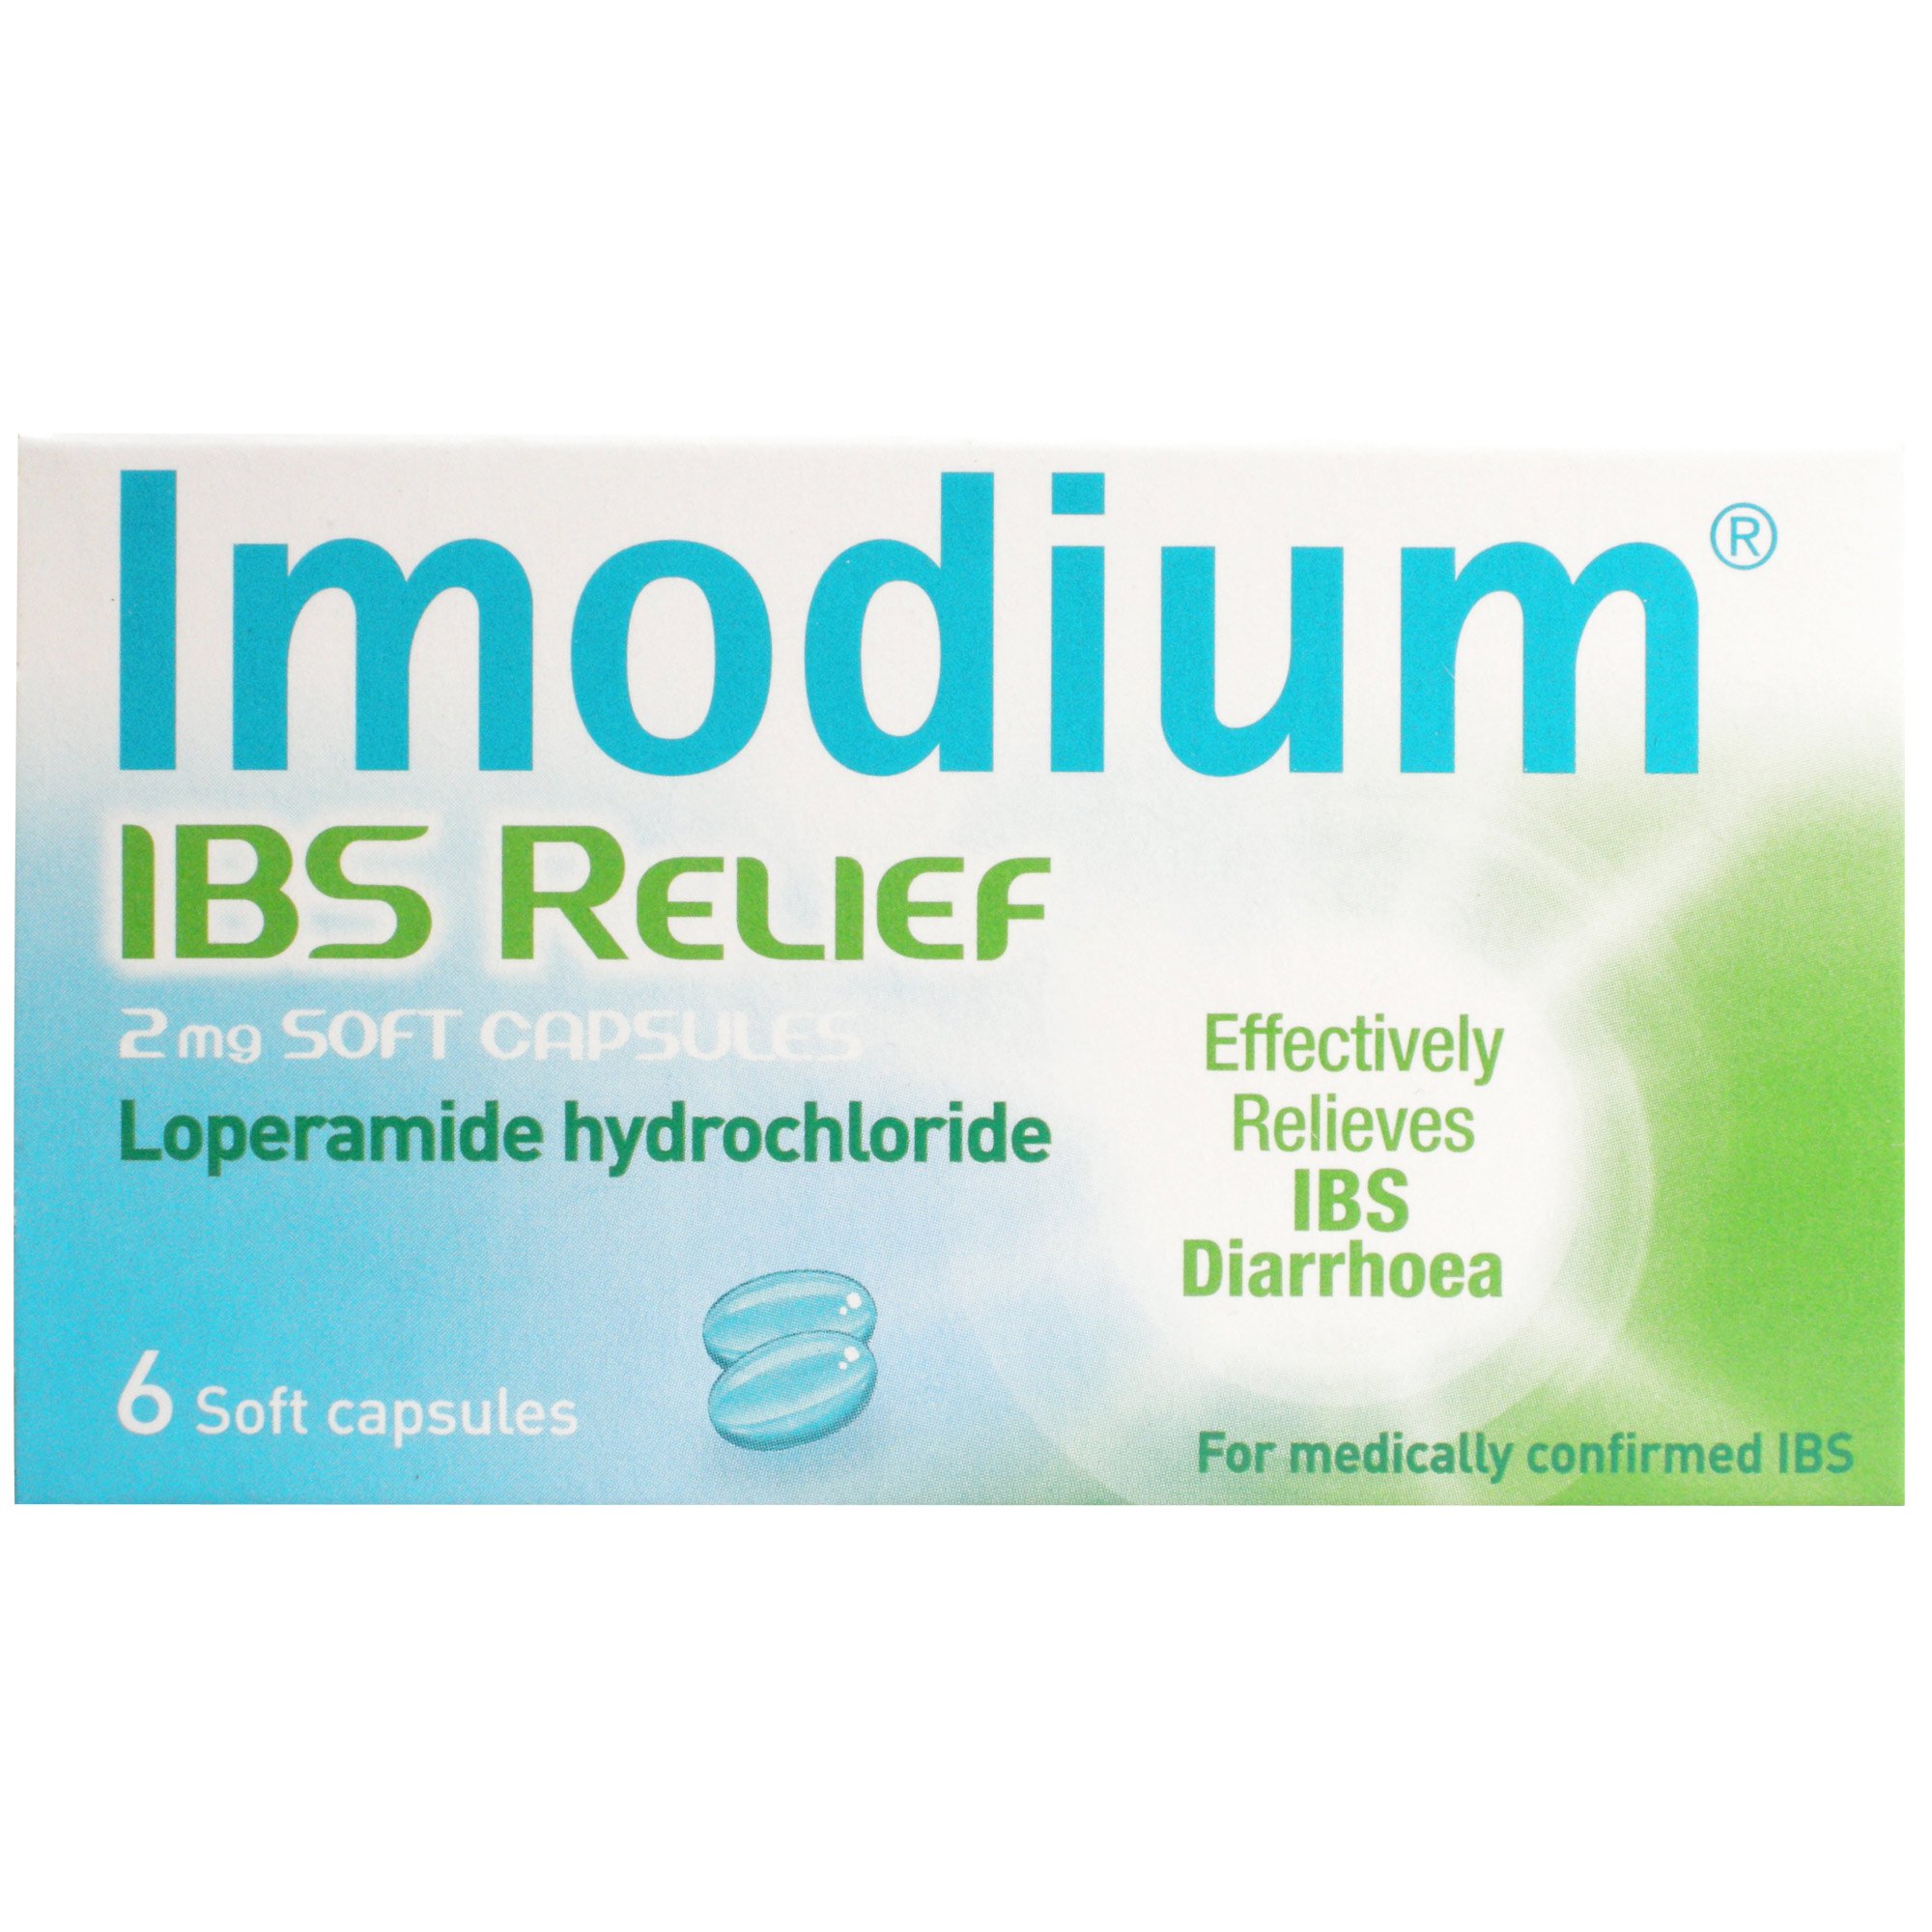 Imodium IBS Relief 2mg – 6 Soft Capsules